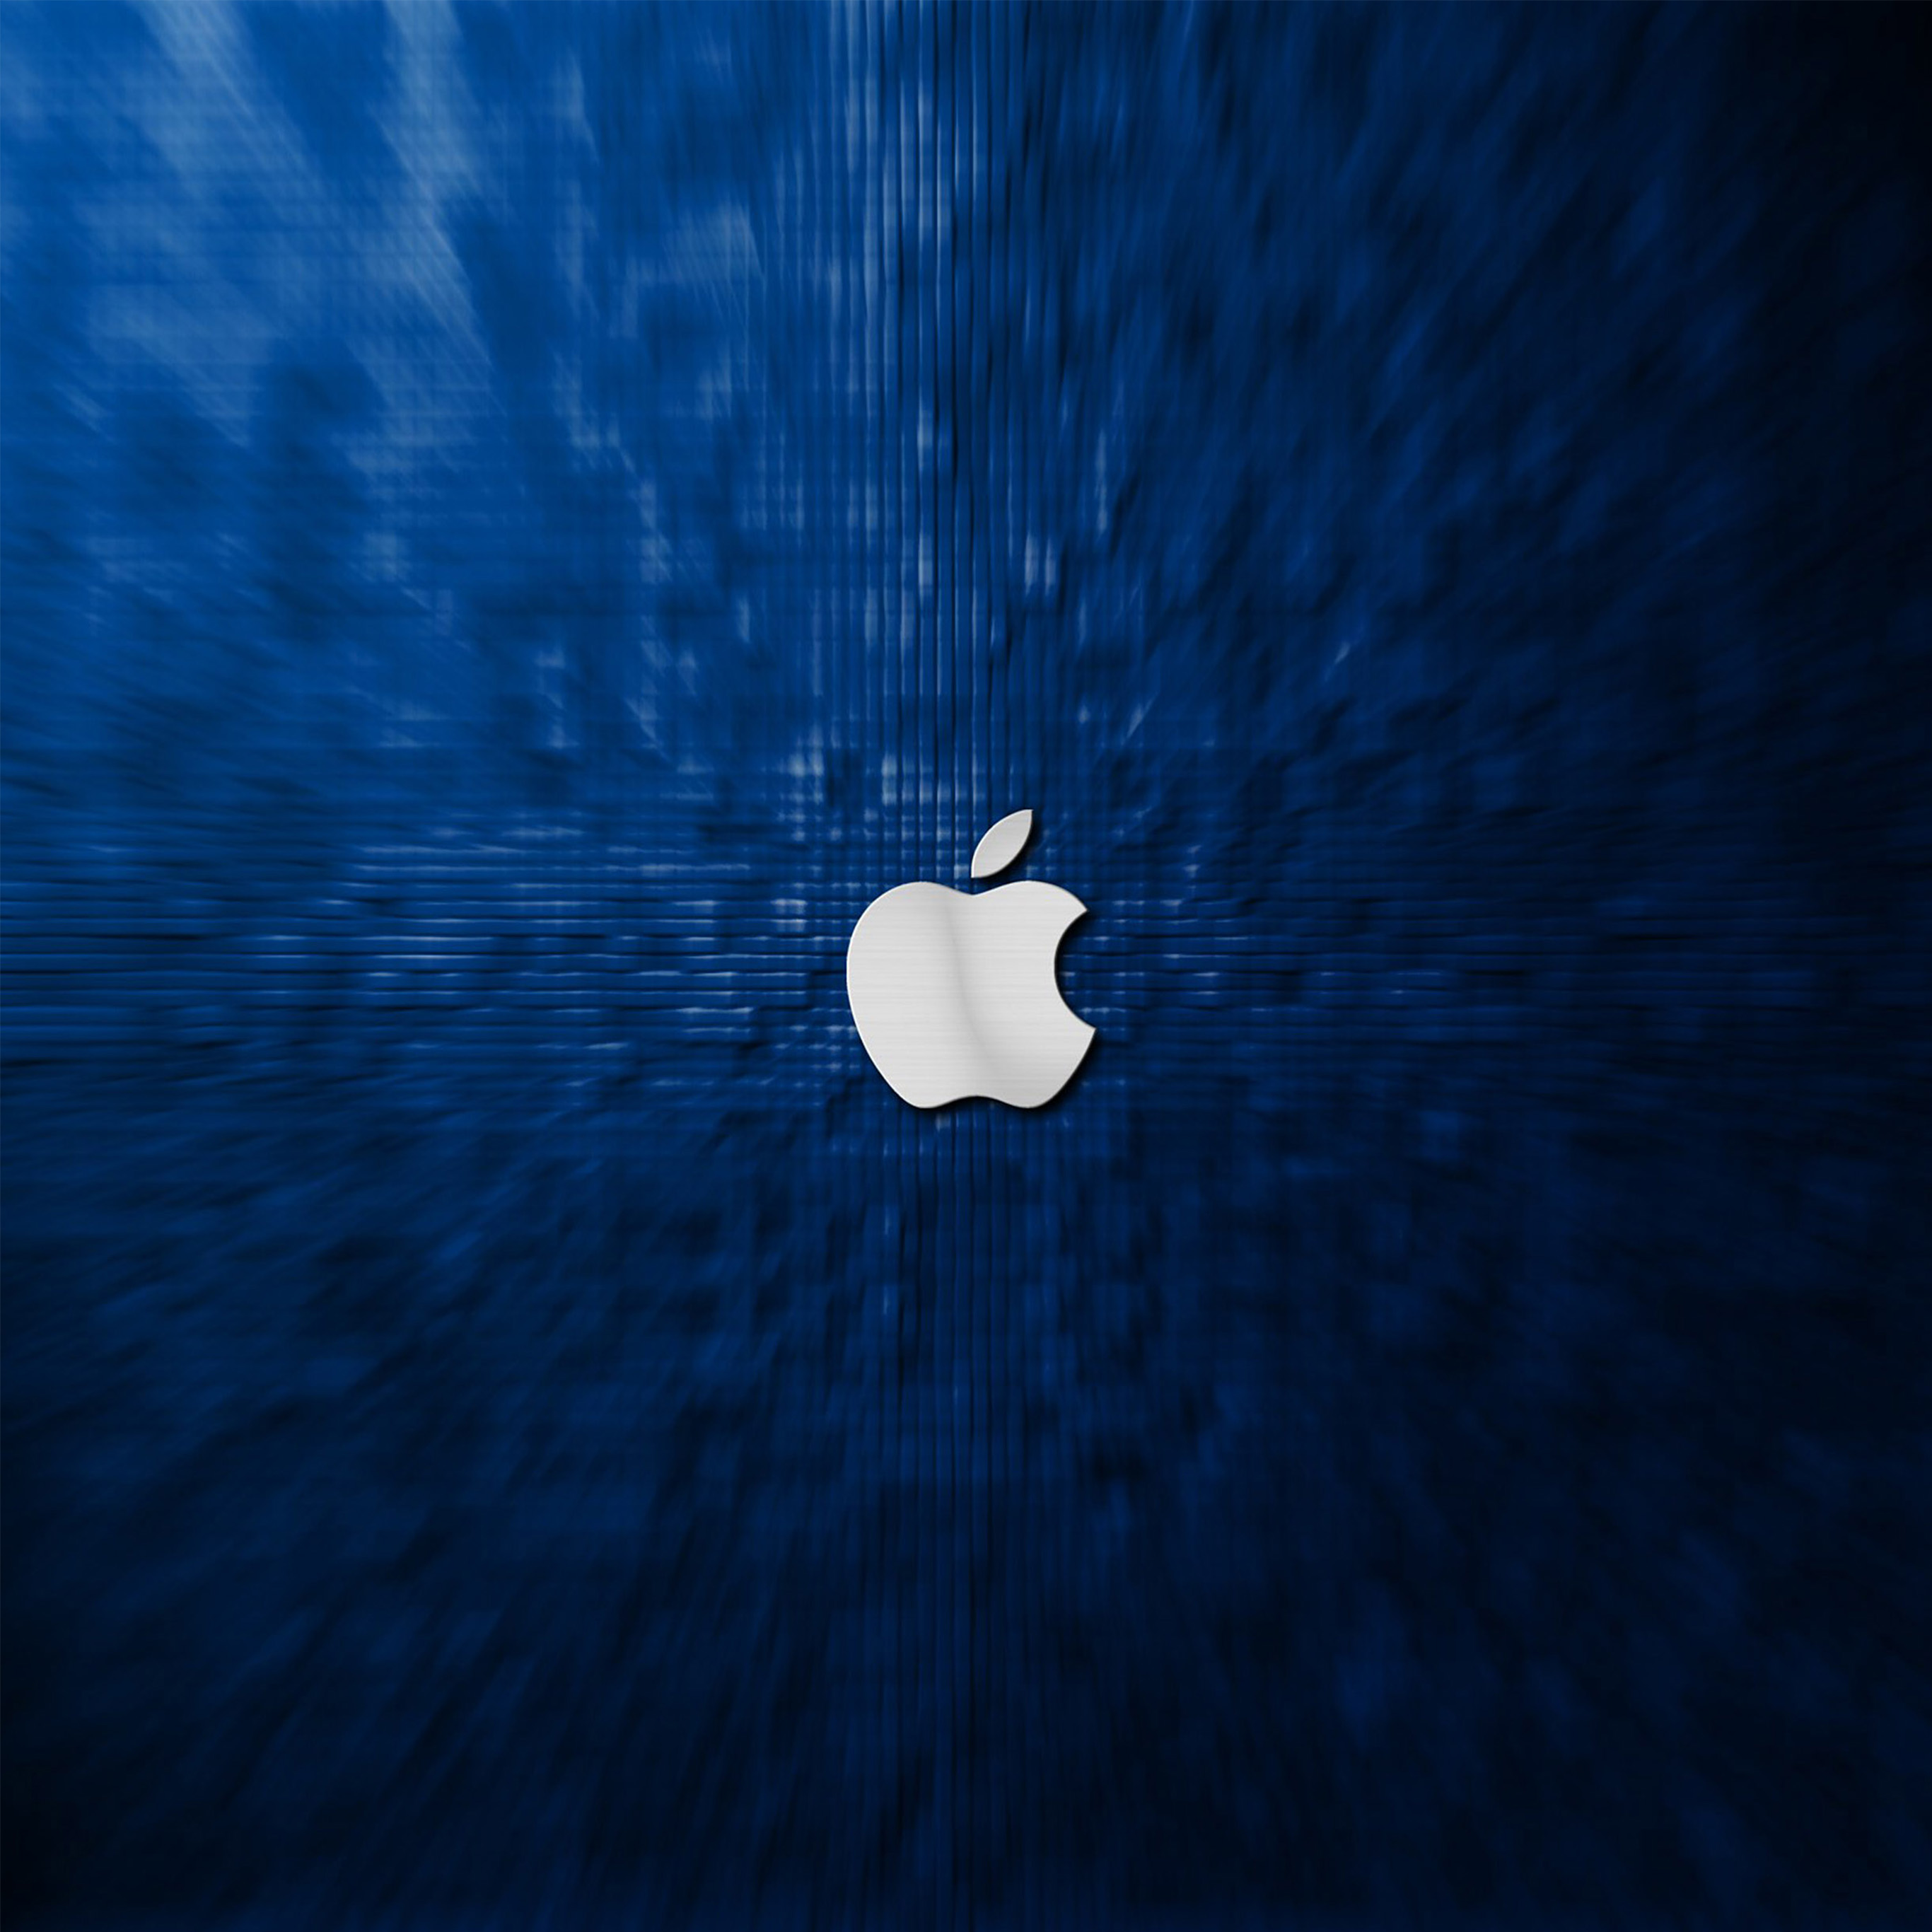   0026 freeios7com apple wallpaper apple matrix ipad retina parallax